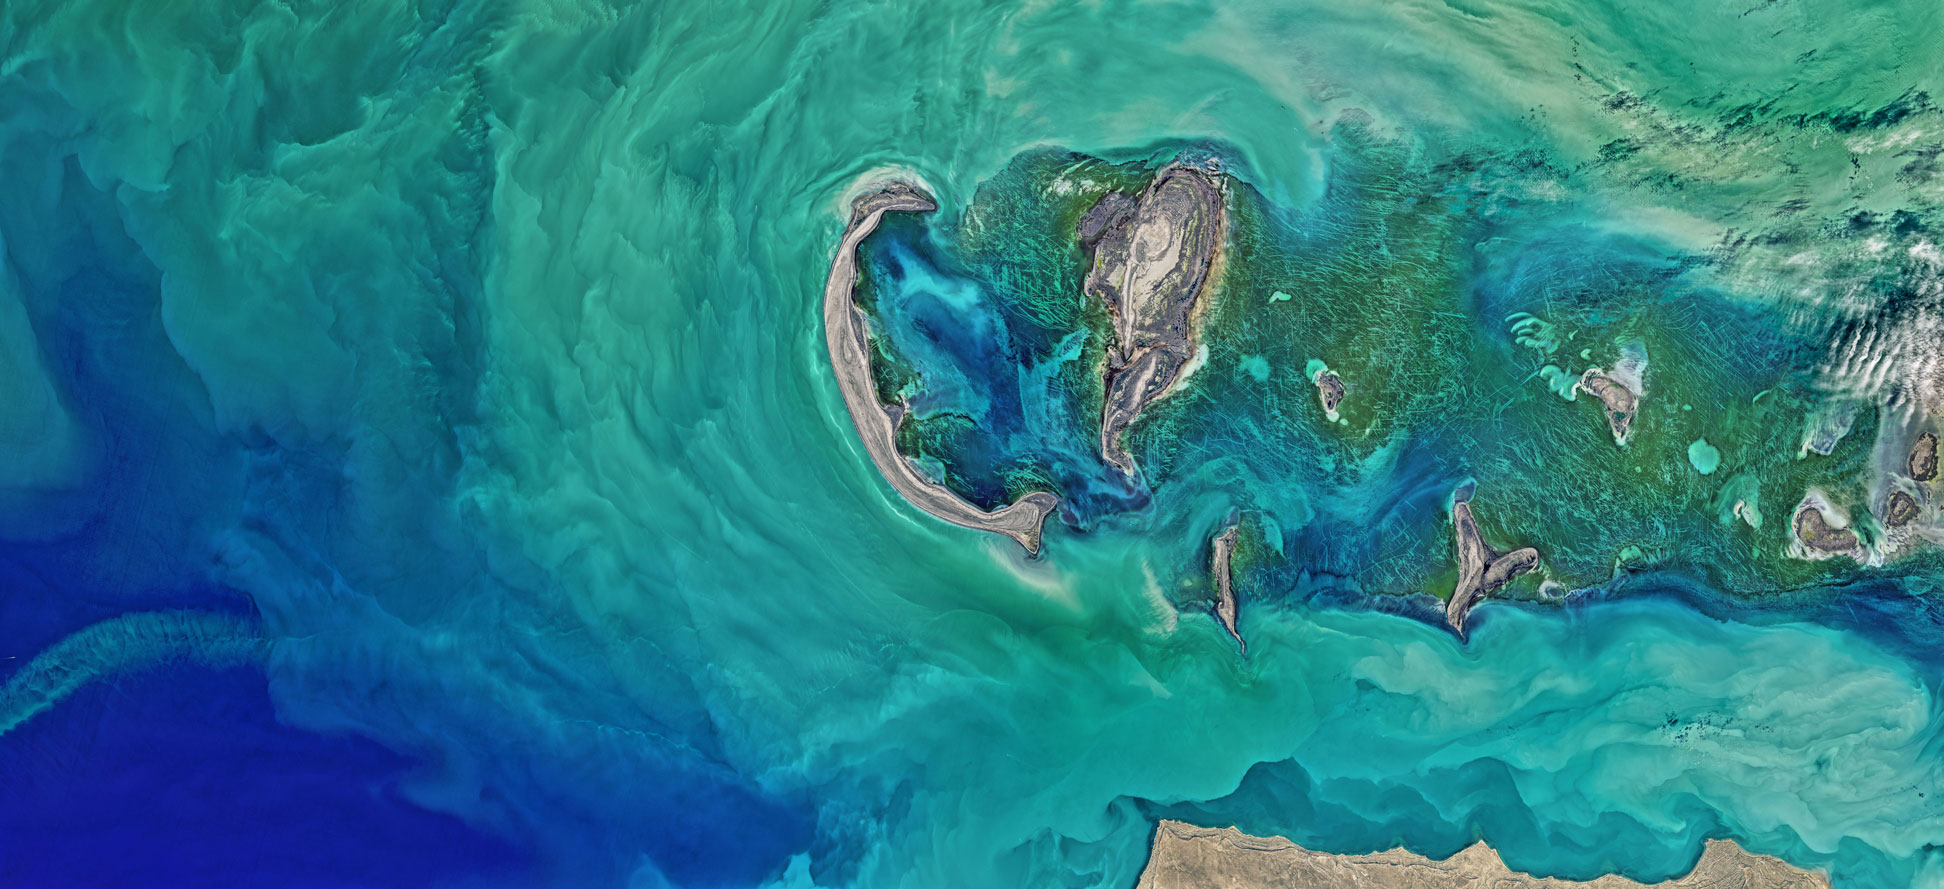 Tyuleniy Archipelago with Kulaly Island (left) and Morskoy Island, Kazakhstan